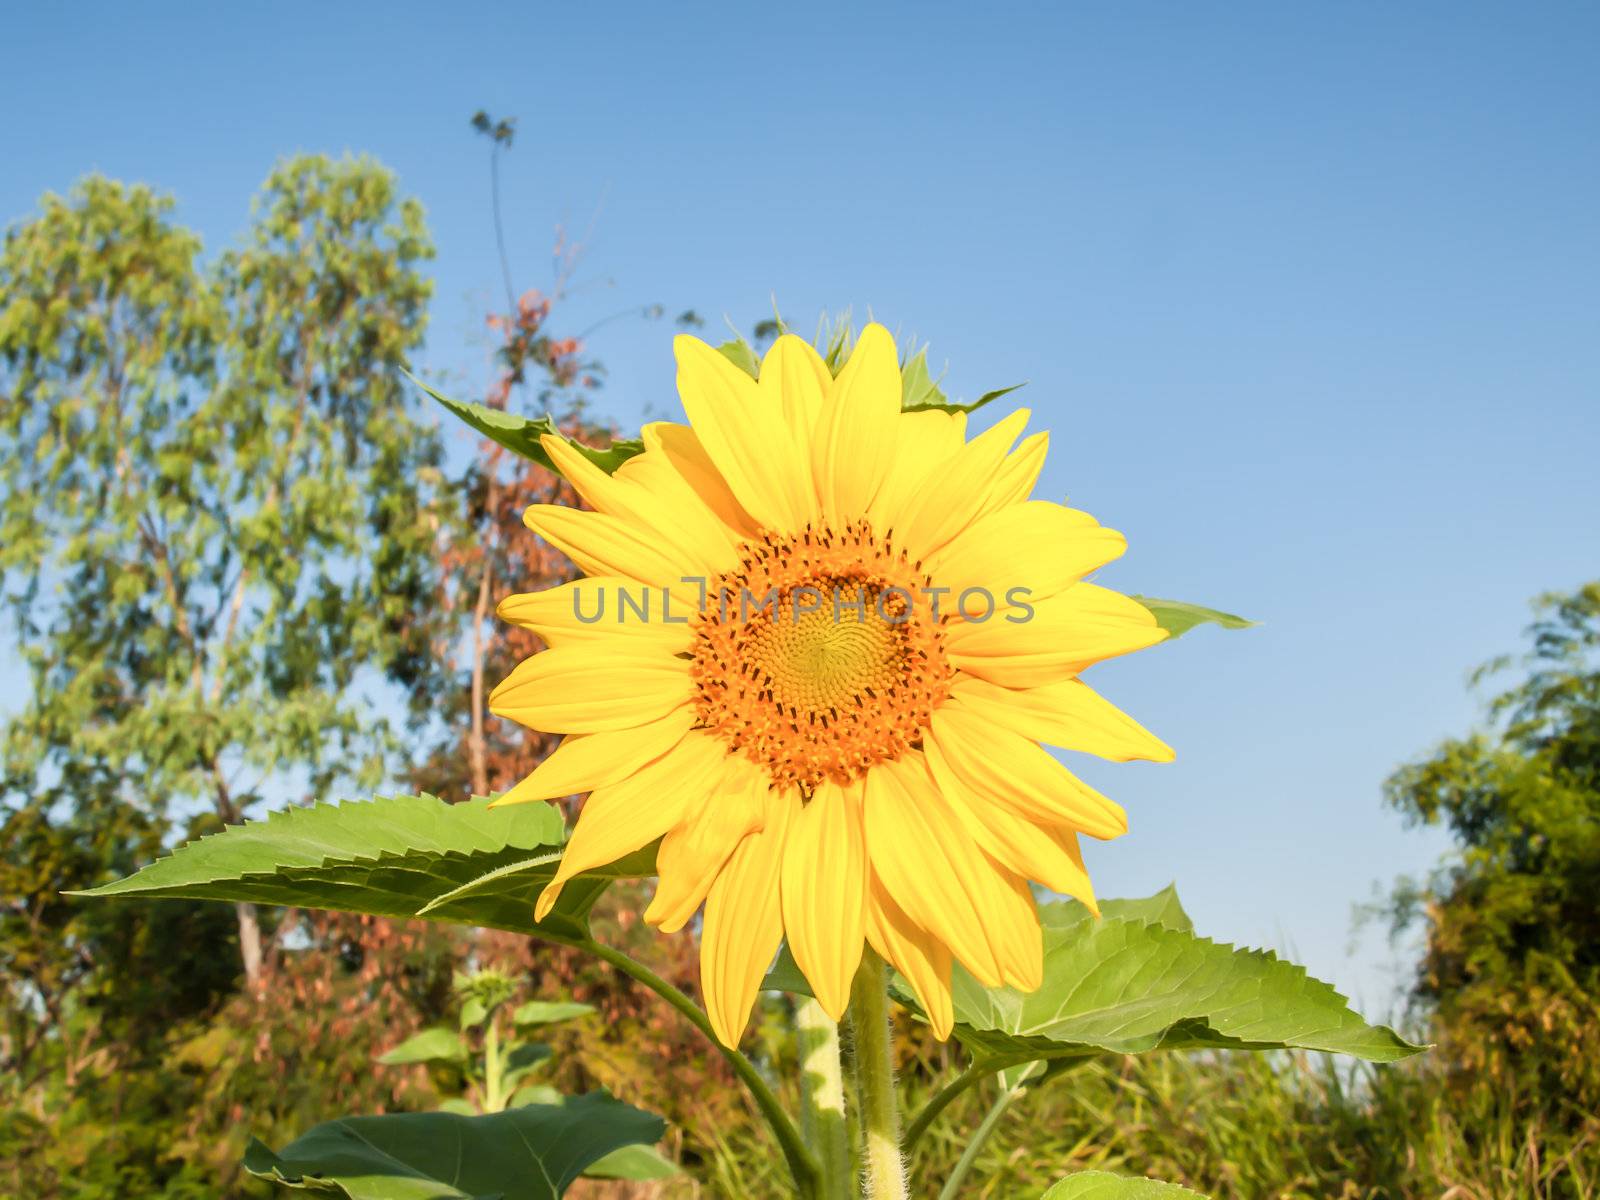 A field of sunflowers by wmitrmatr